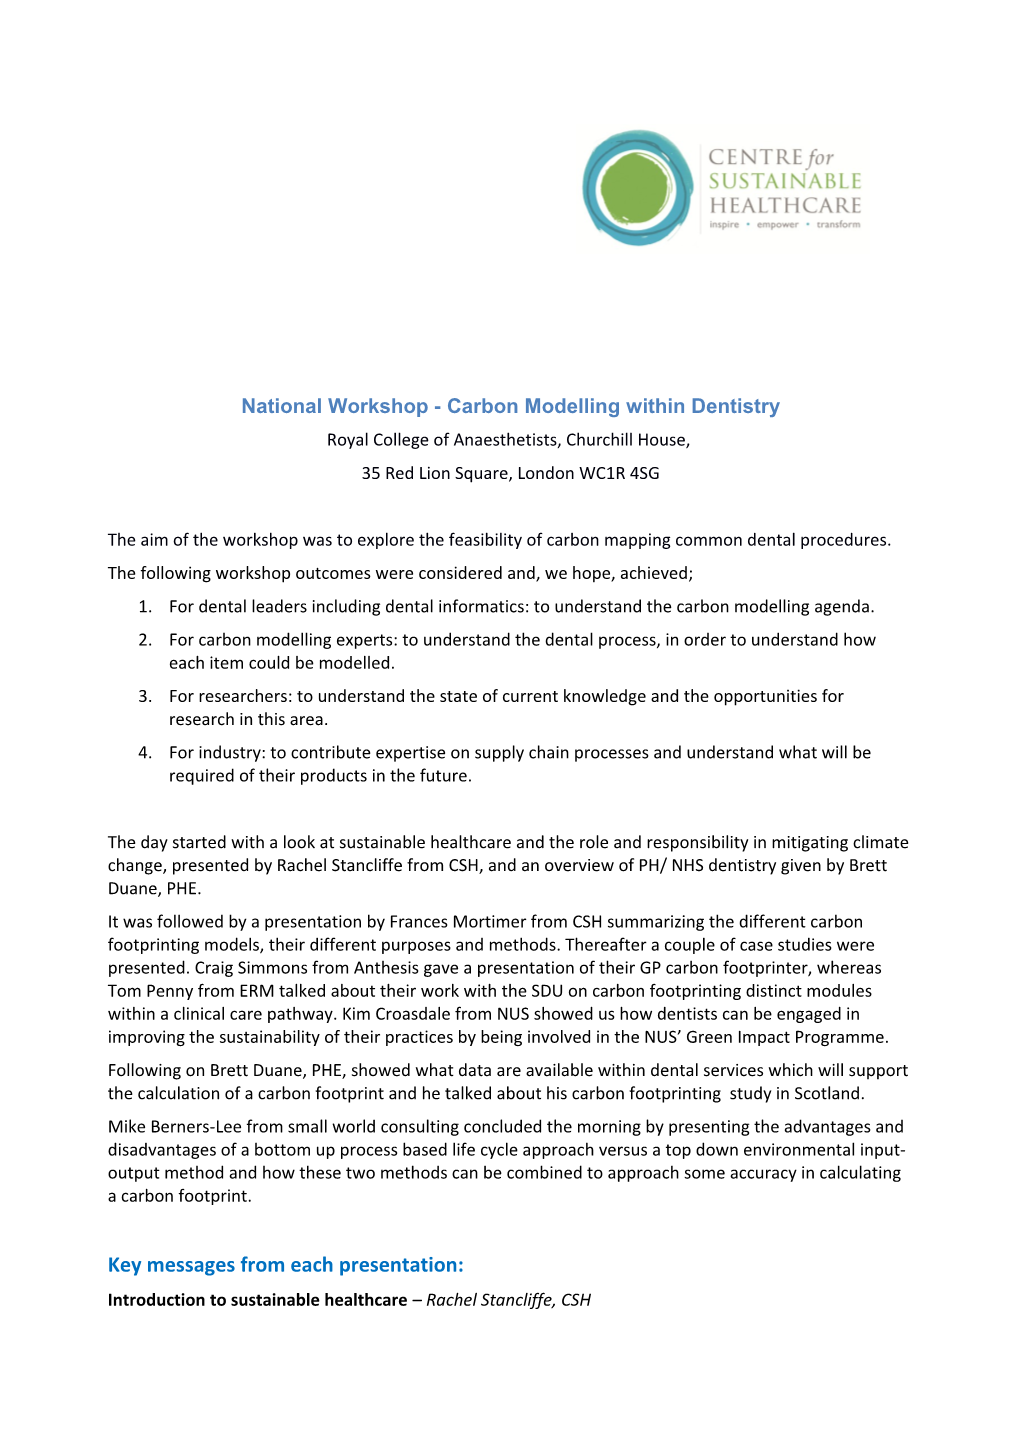 National Workshop- Carbon Modelling Within Dentistry